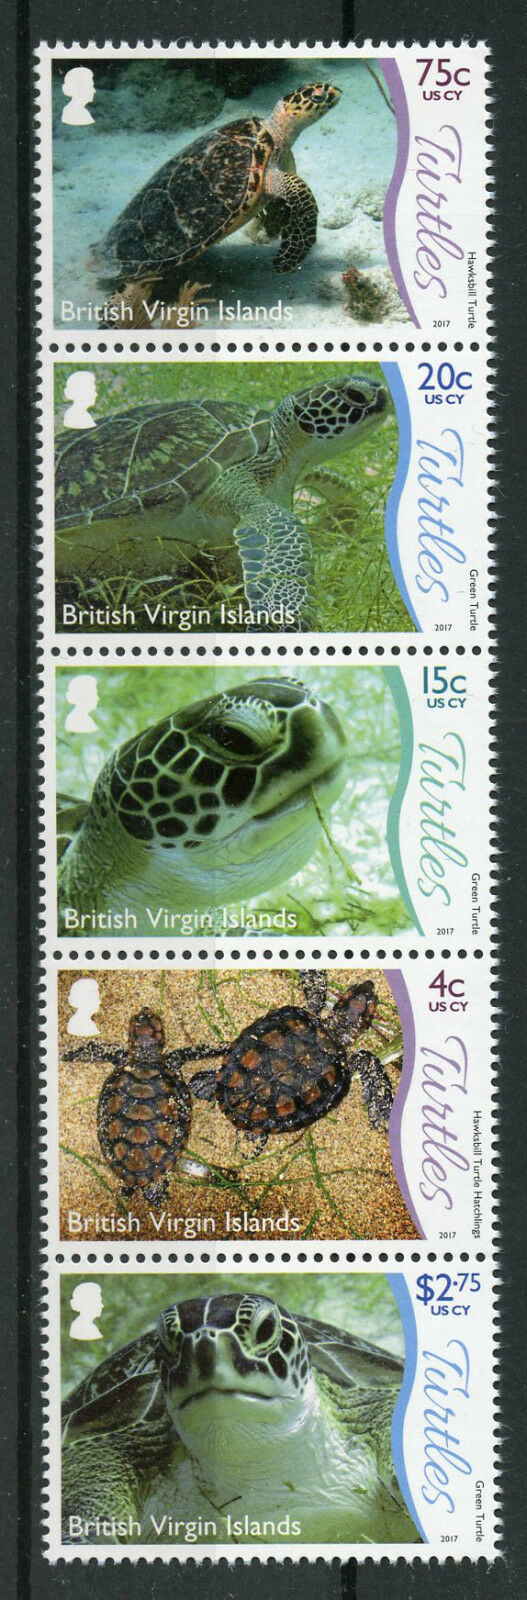 BVI 2017 MNH Turtles Stamps Underwater Life Pt 1 Reptiles 5v Strip